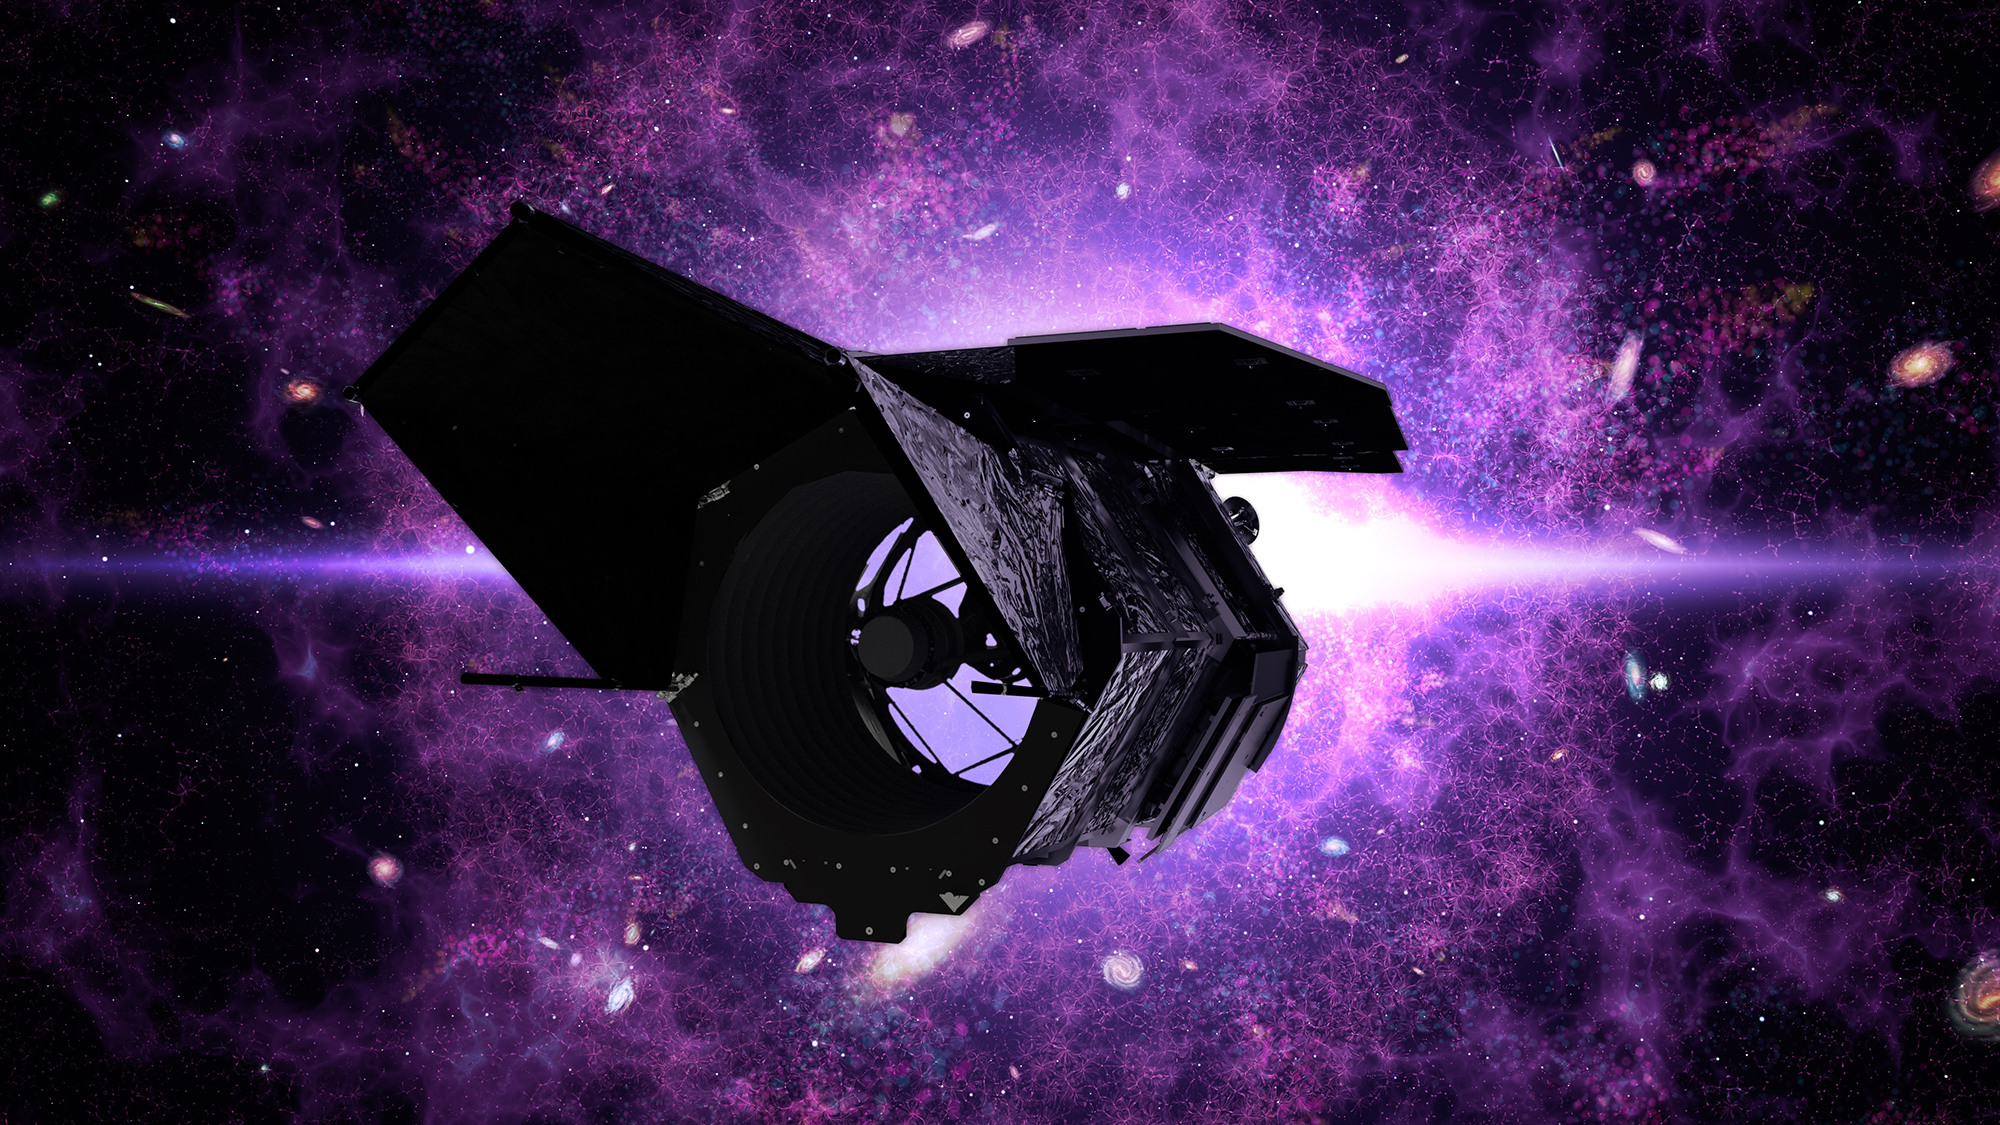 spy satellite rendering with purple background